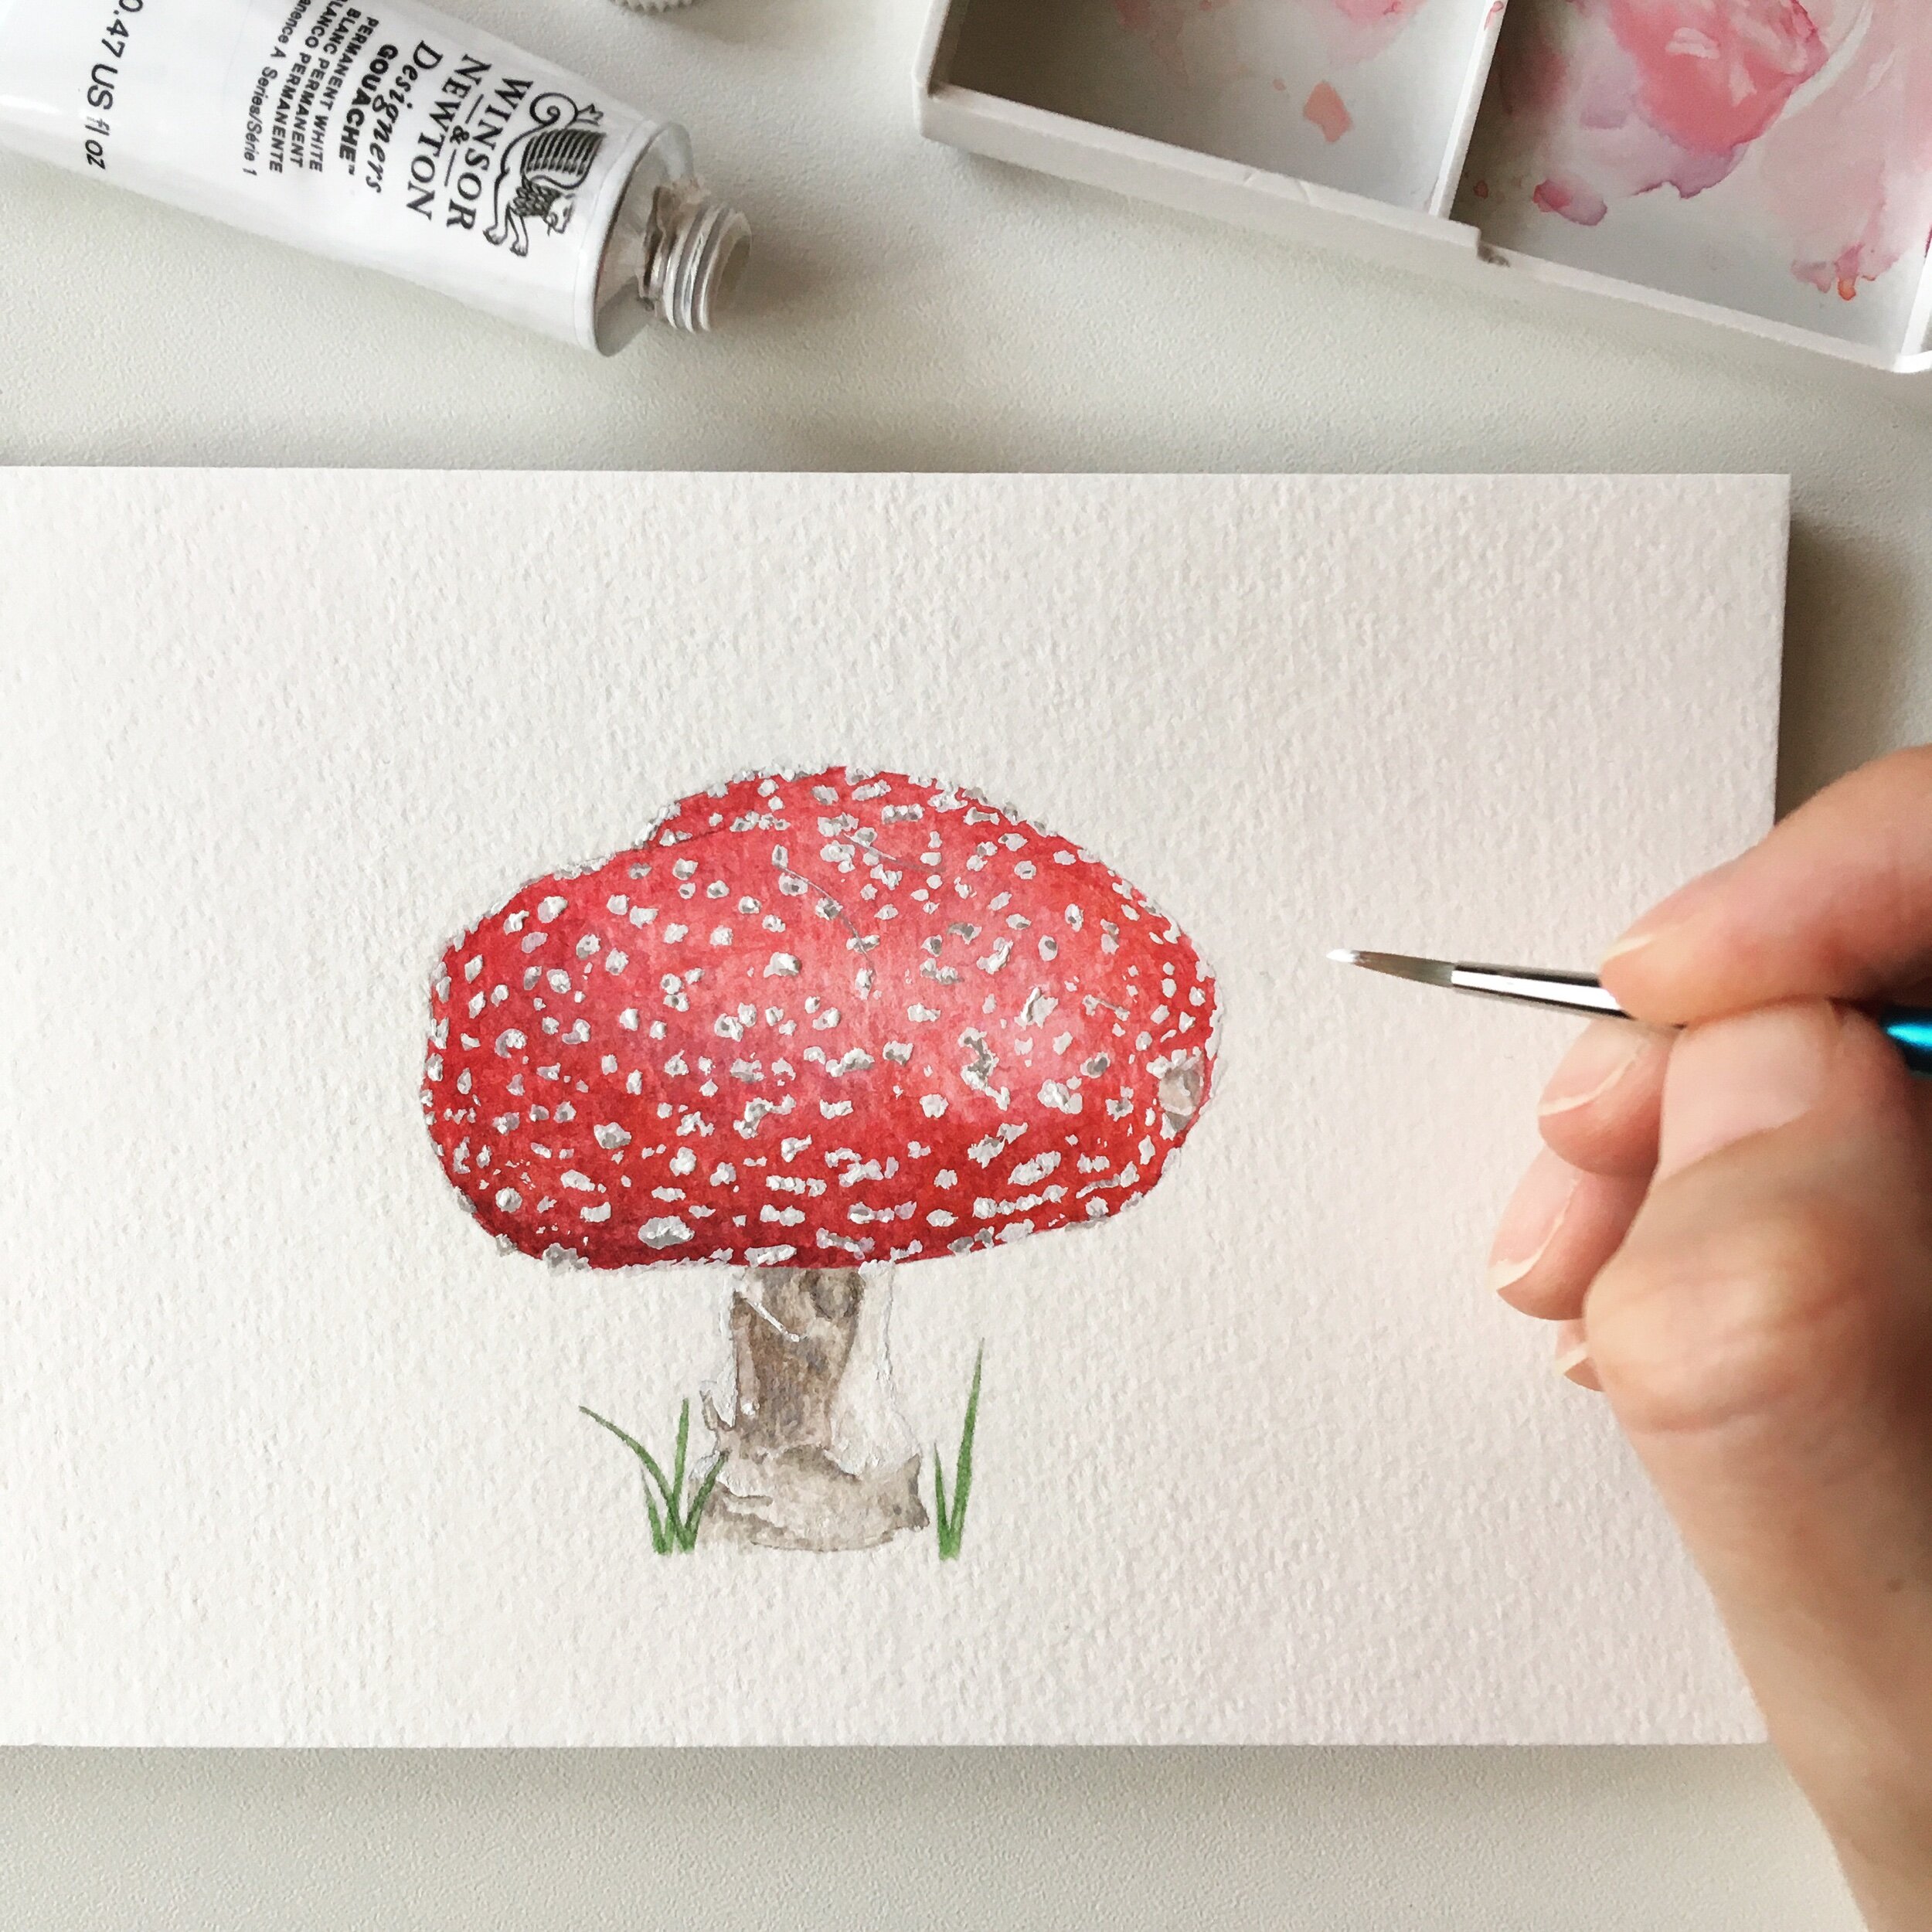 Mushroom watercolour and gouache painting